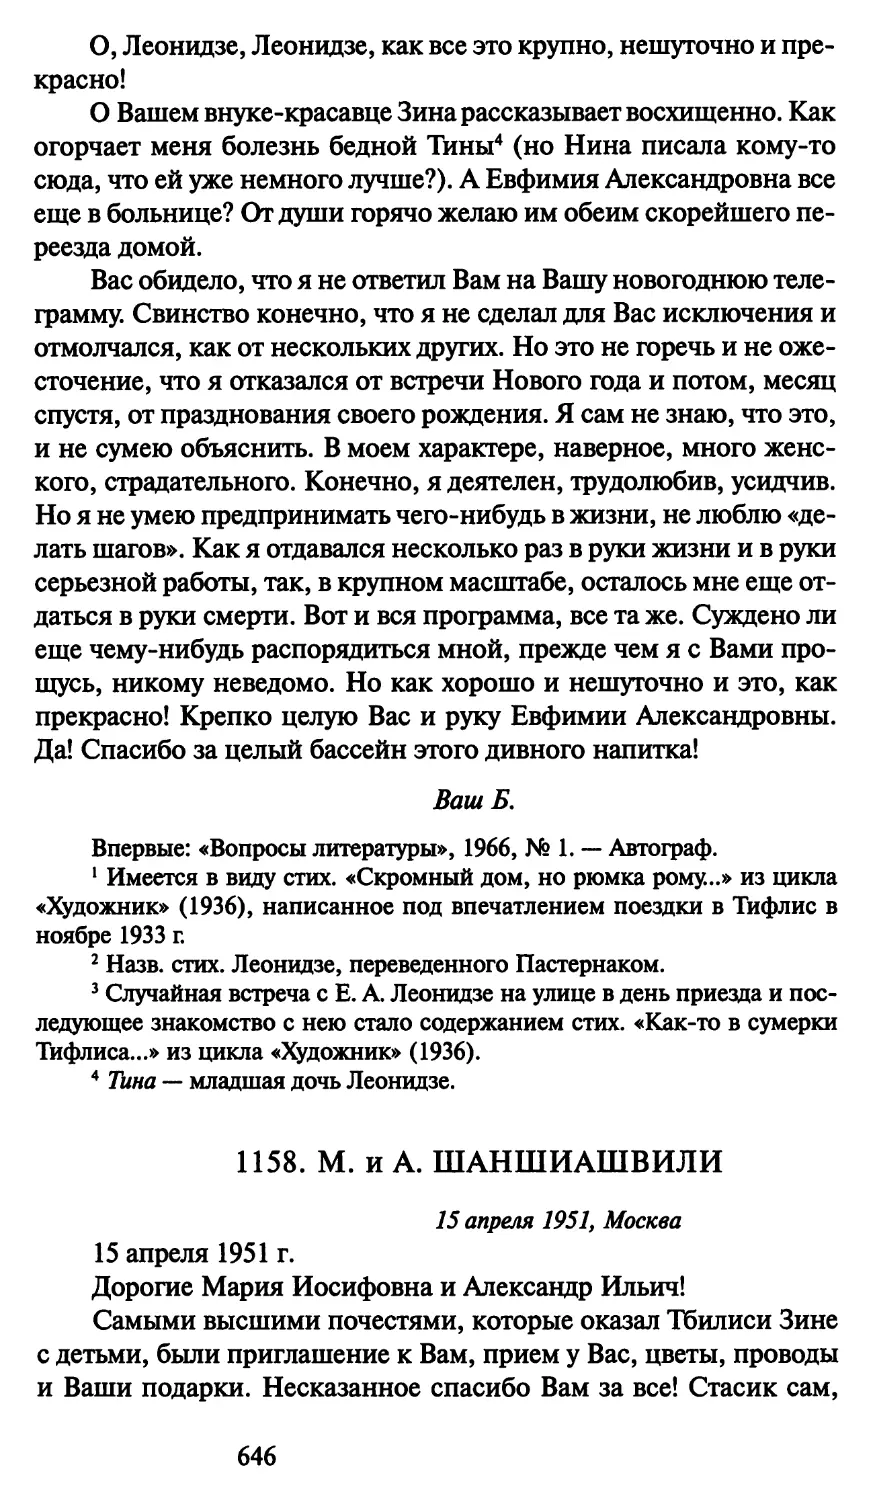 1158. М. и А. Шаншиашвили 15 апреля 1951